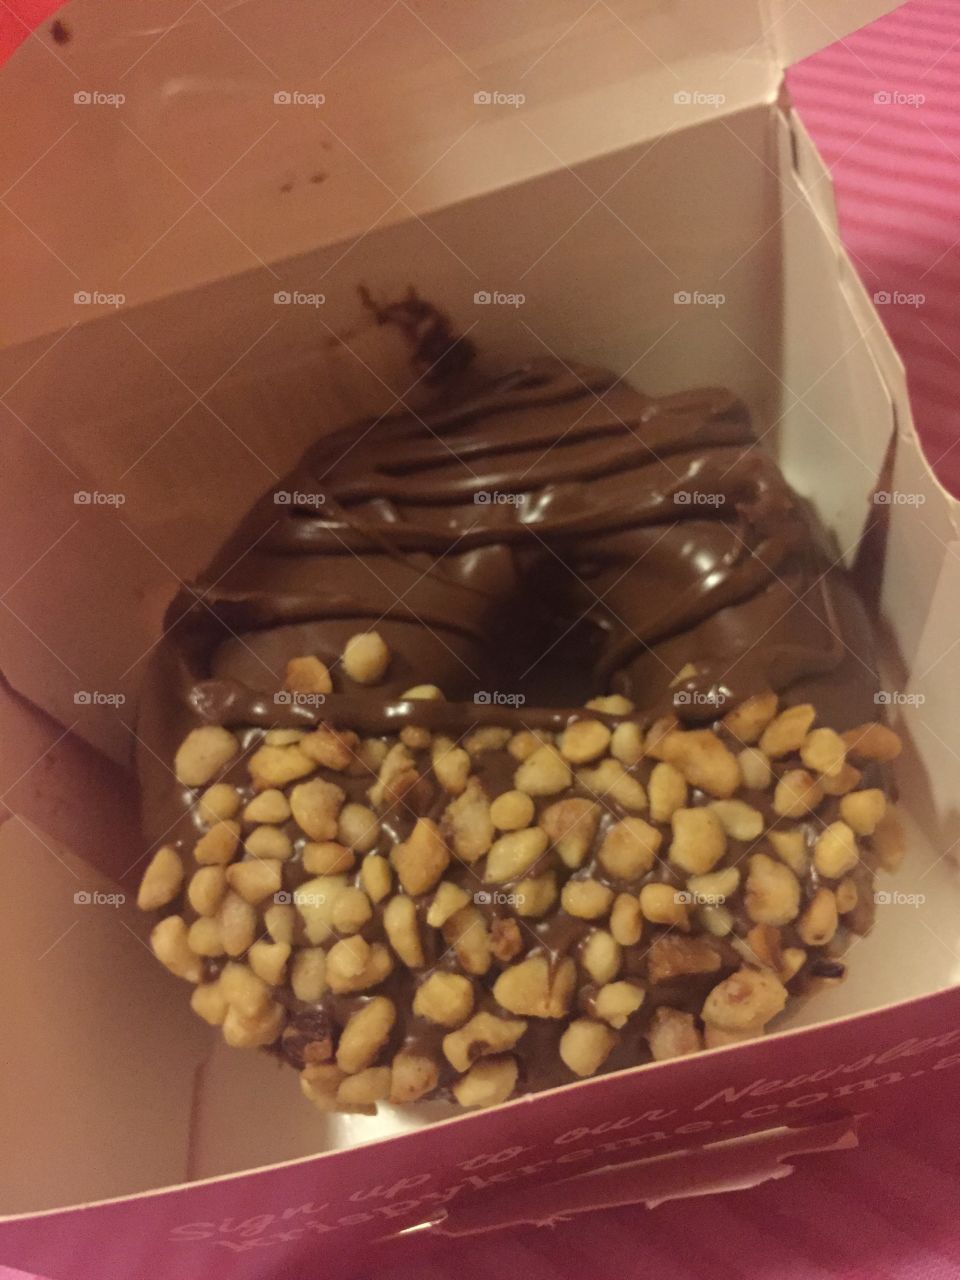 #Krispy #Kreme #Donut #Nutella #Chocolate #sweet #delicious #latenight #snack 